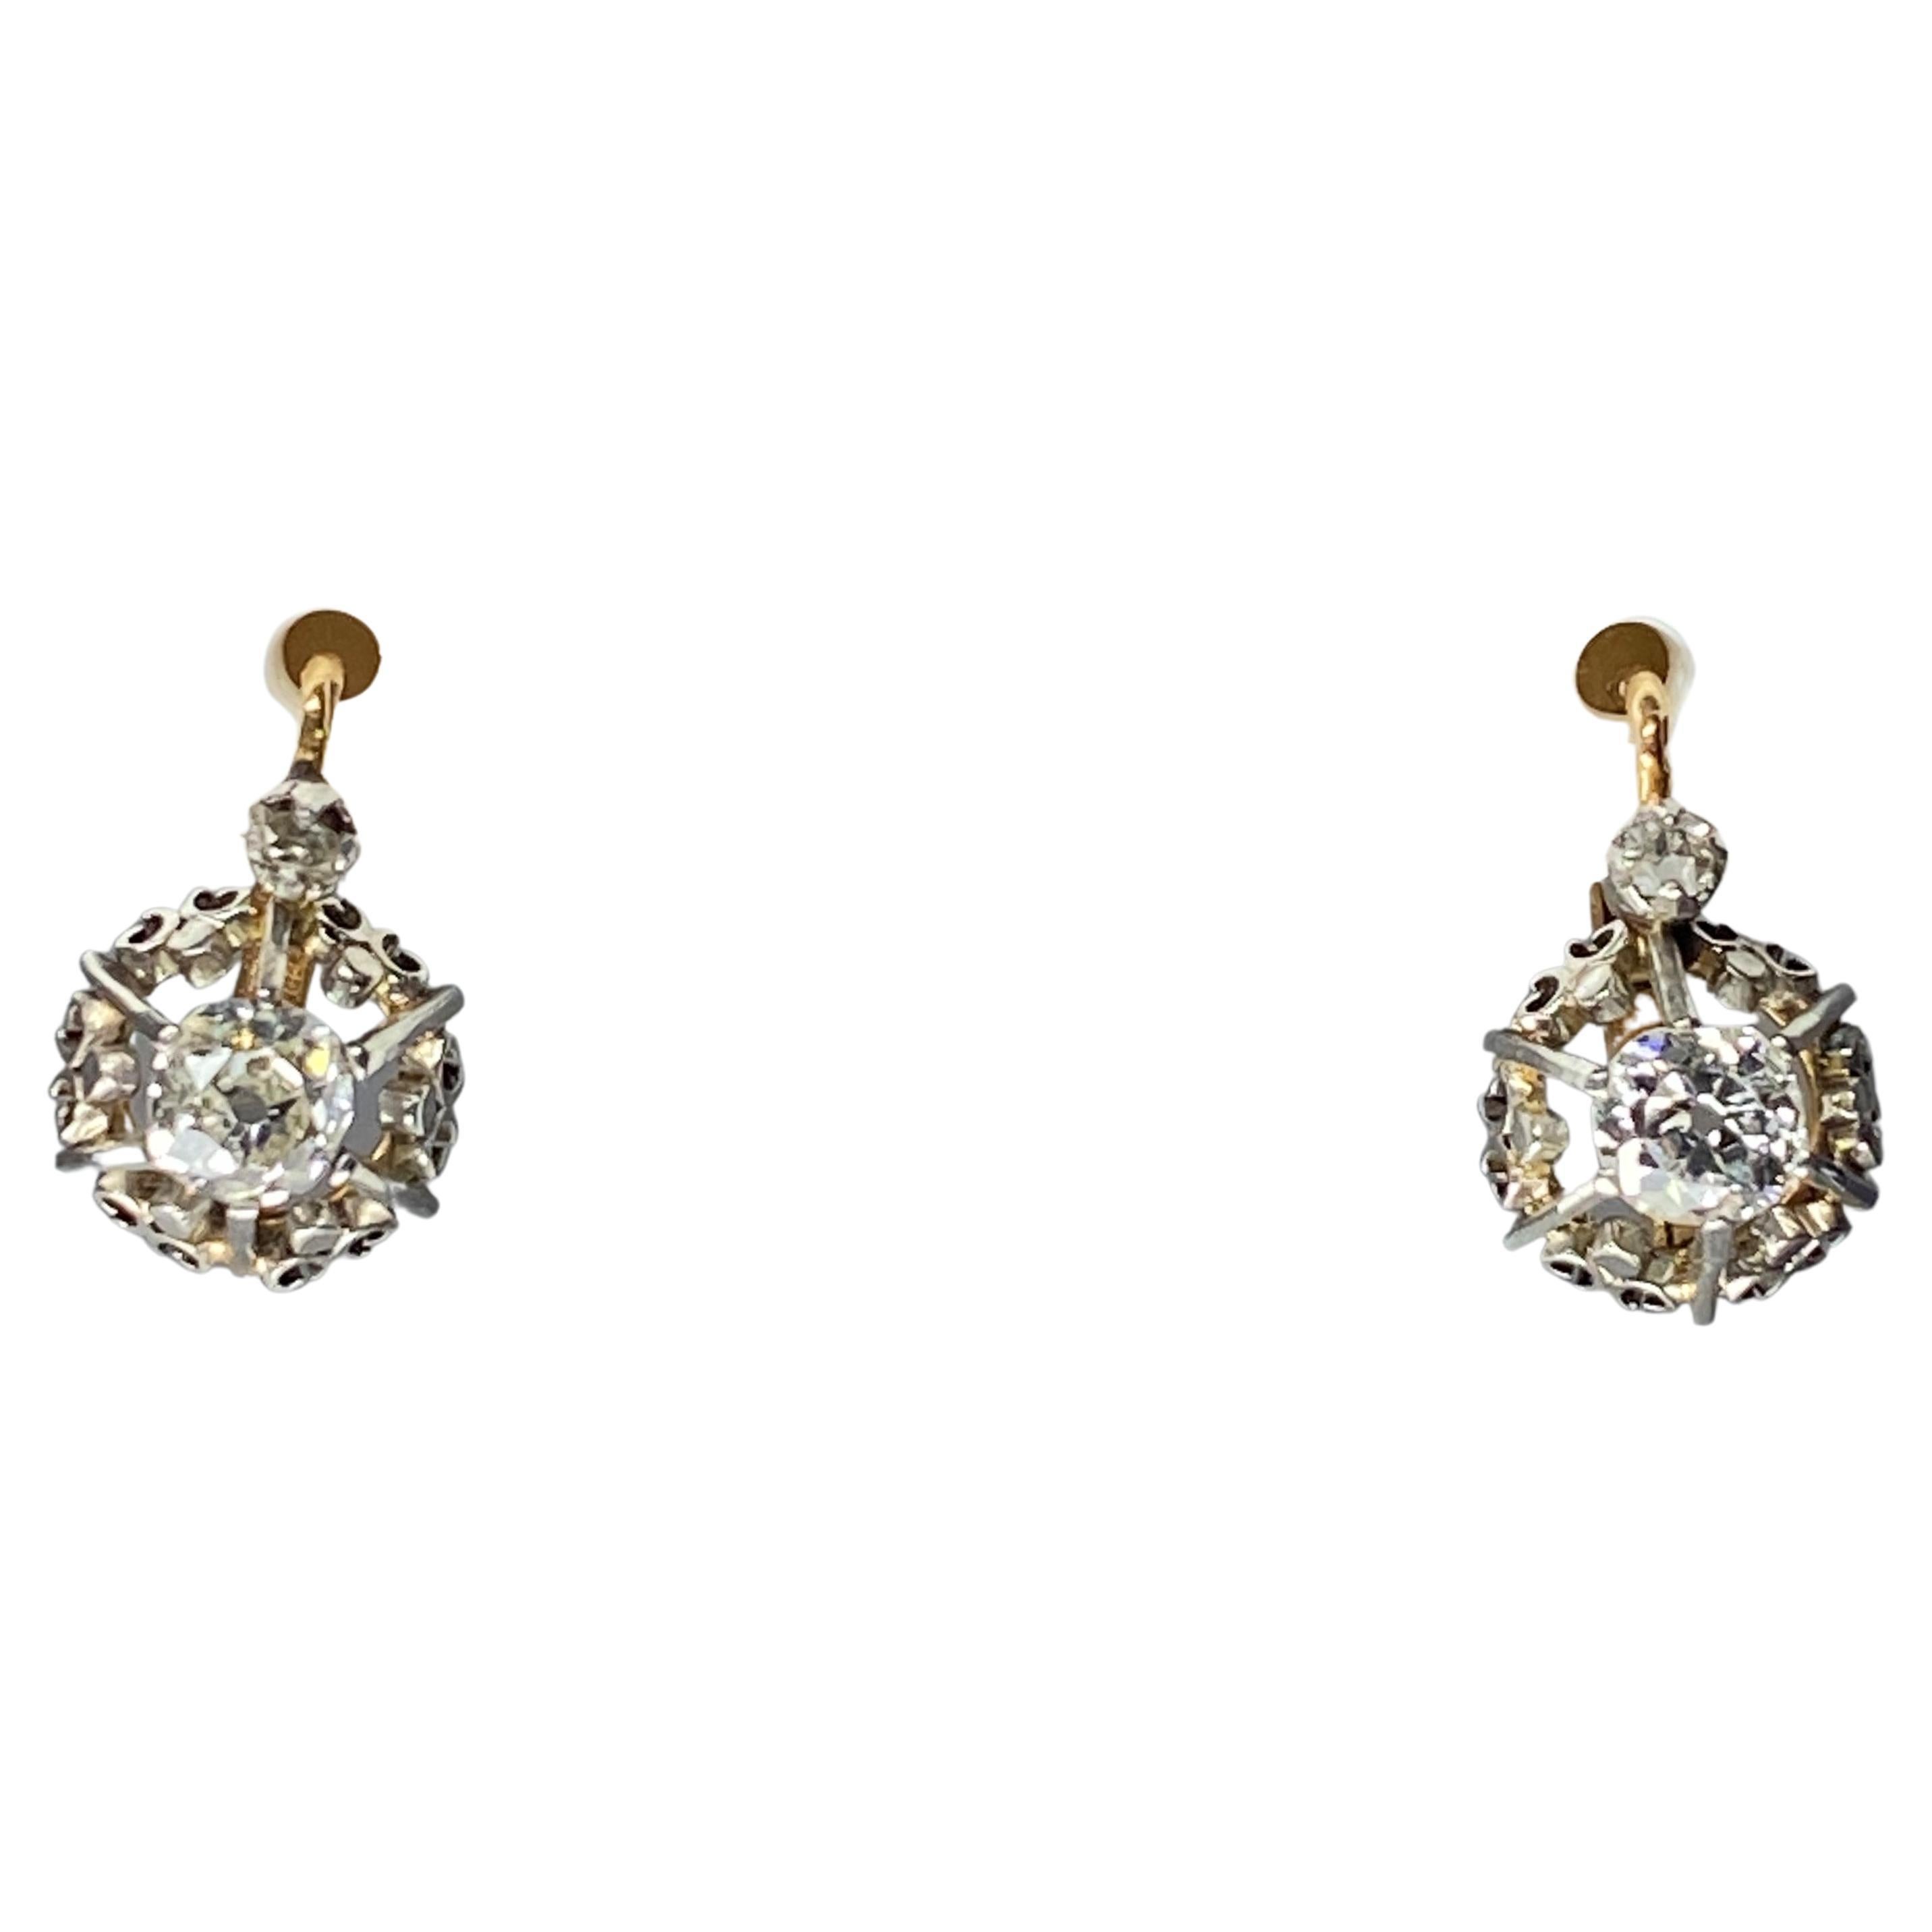 18k Earrings Set with Diamonds, Around 1900